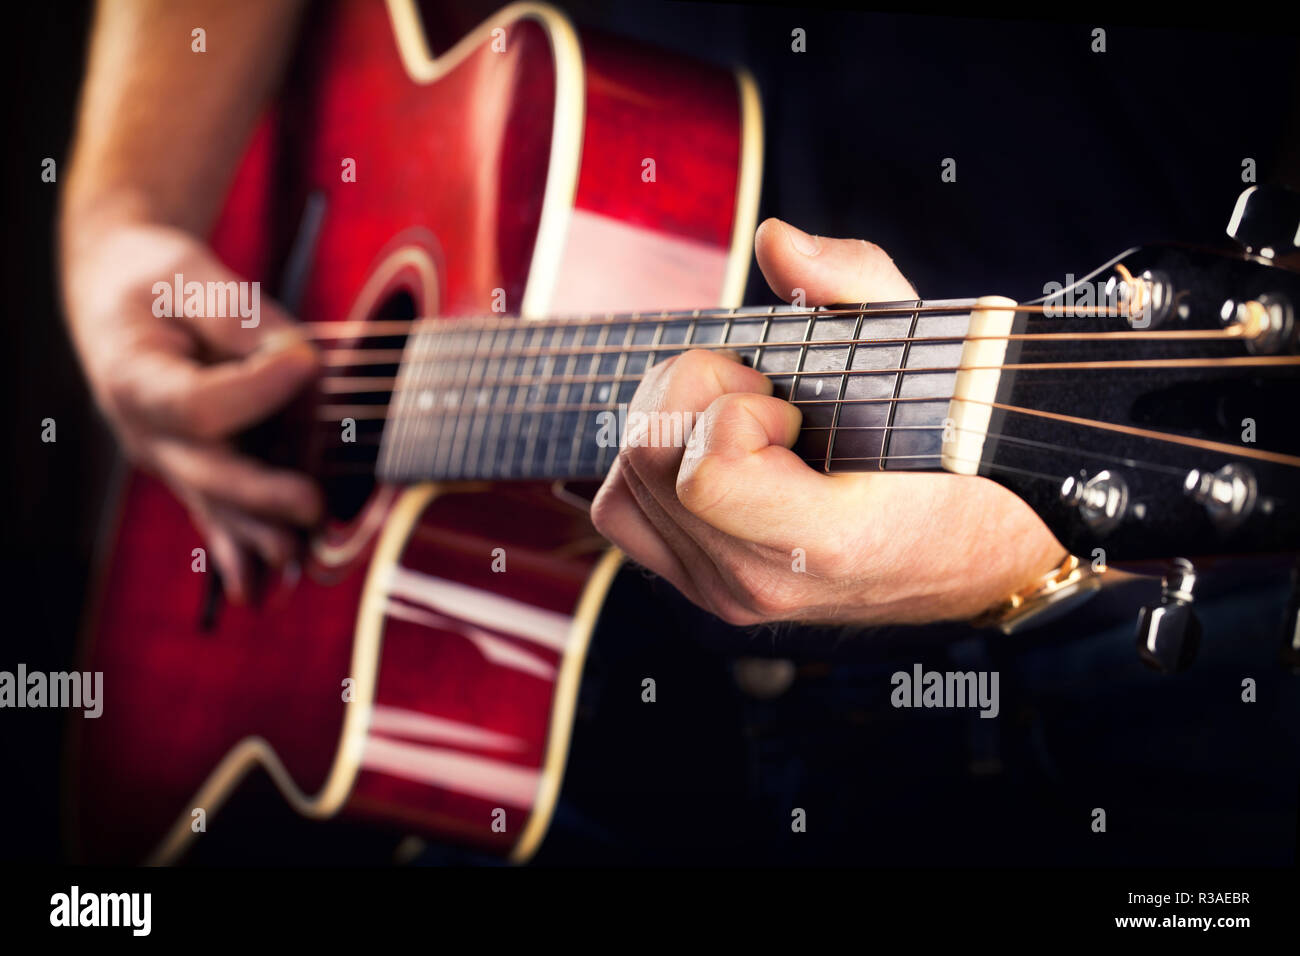 musician playing guitar Stock Photo